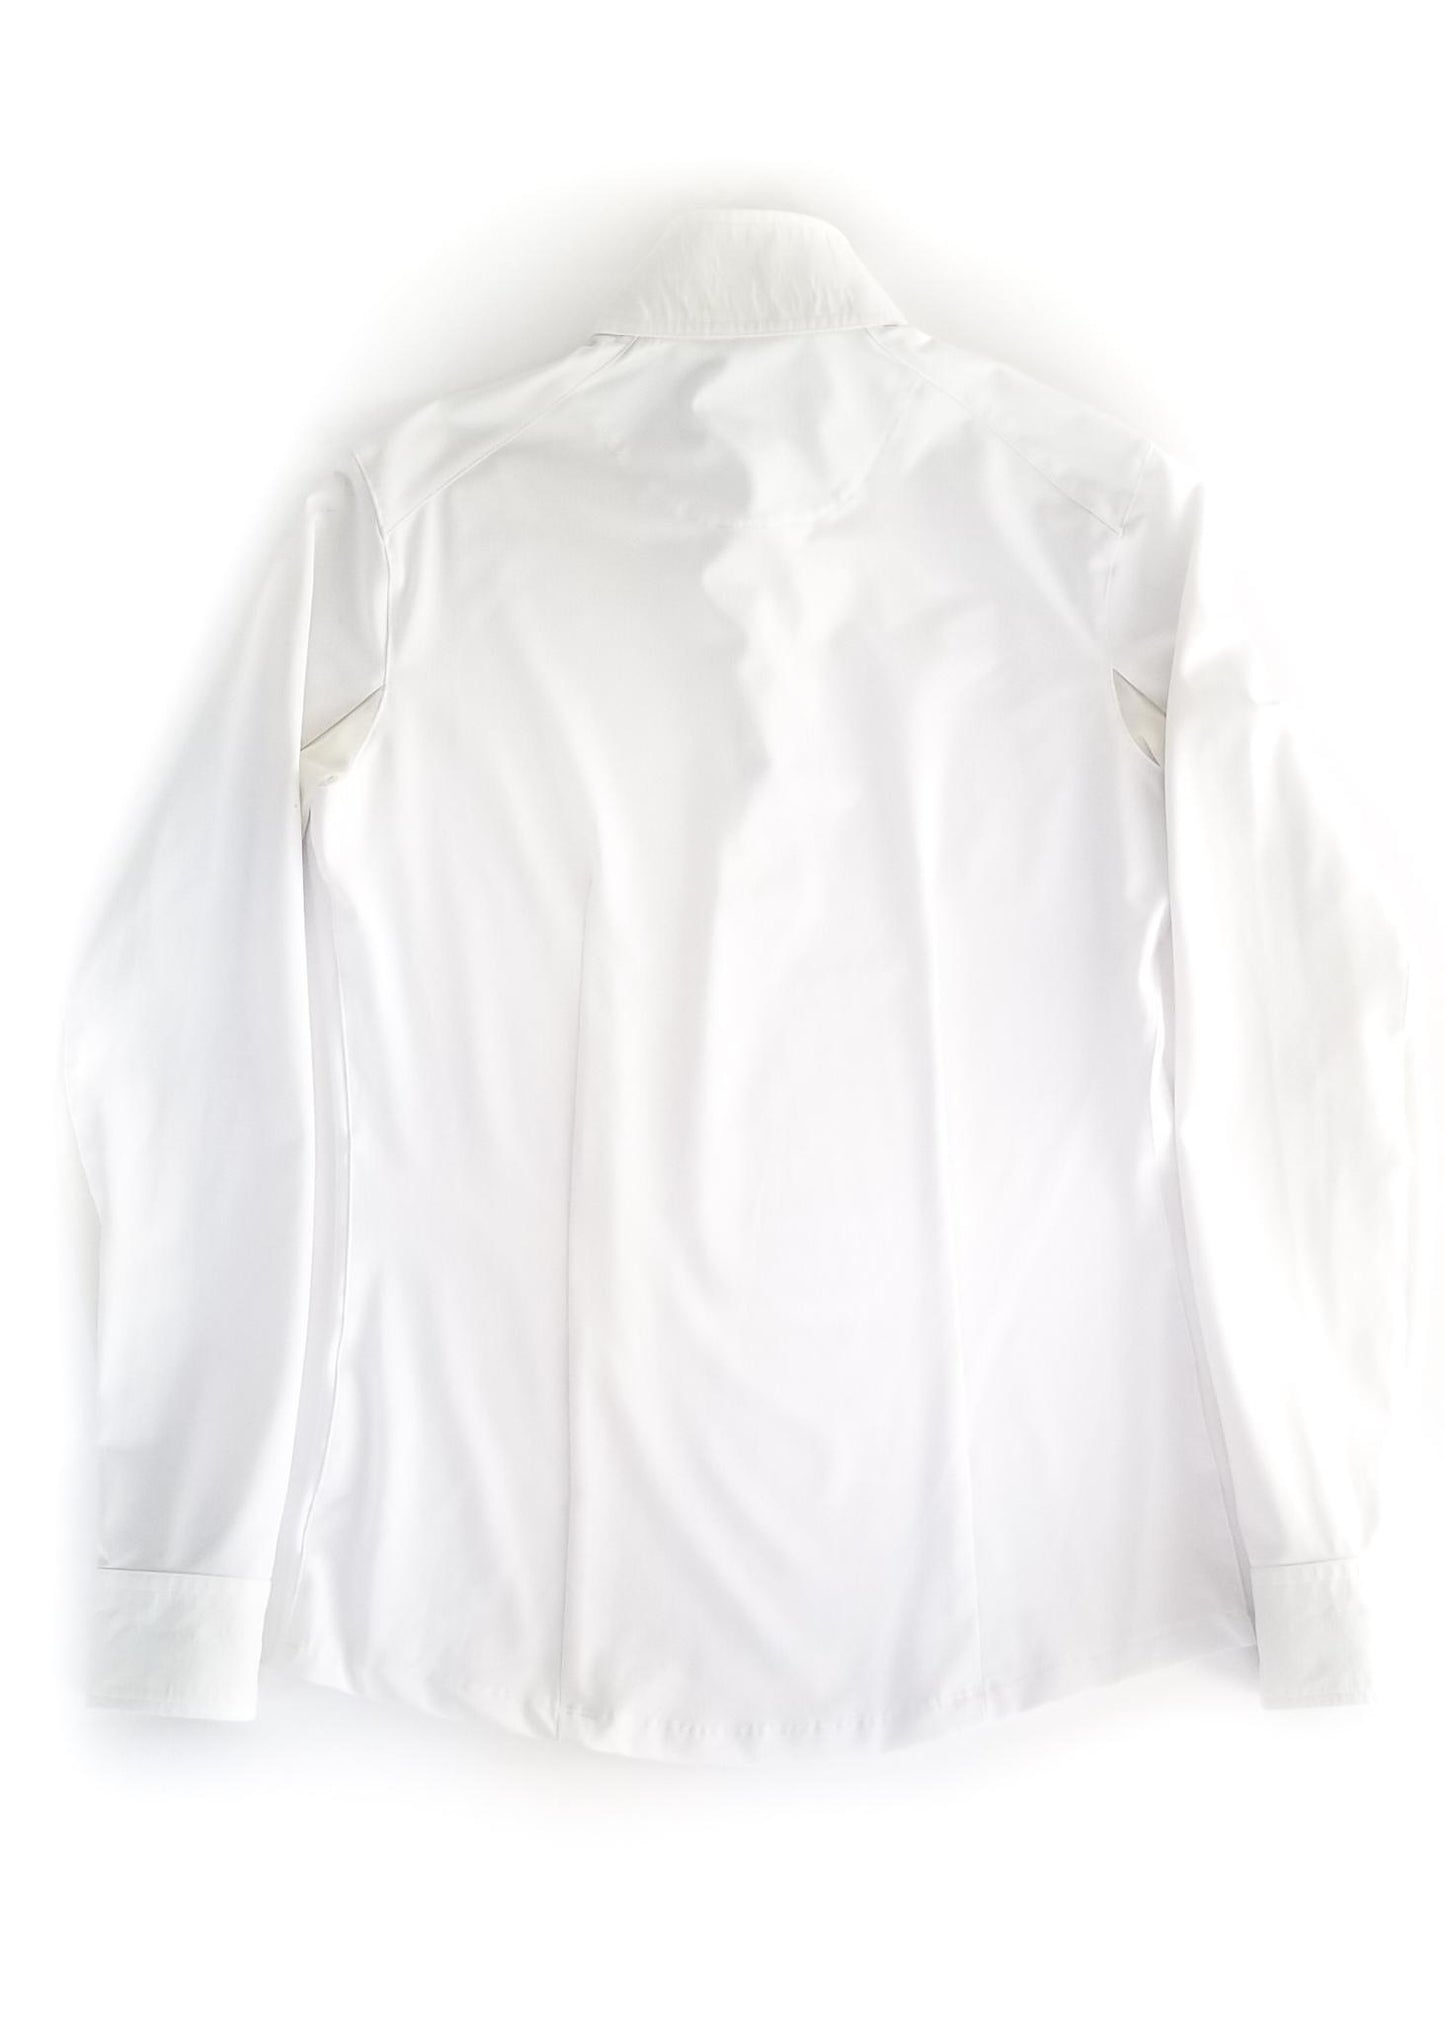 The Tailored Sportsman IceFil Show Shirt - White - Women's Medium